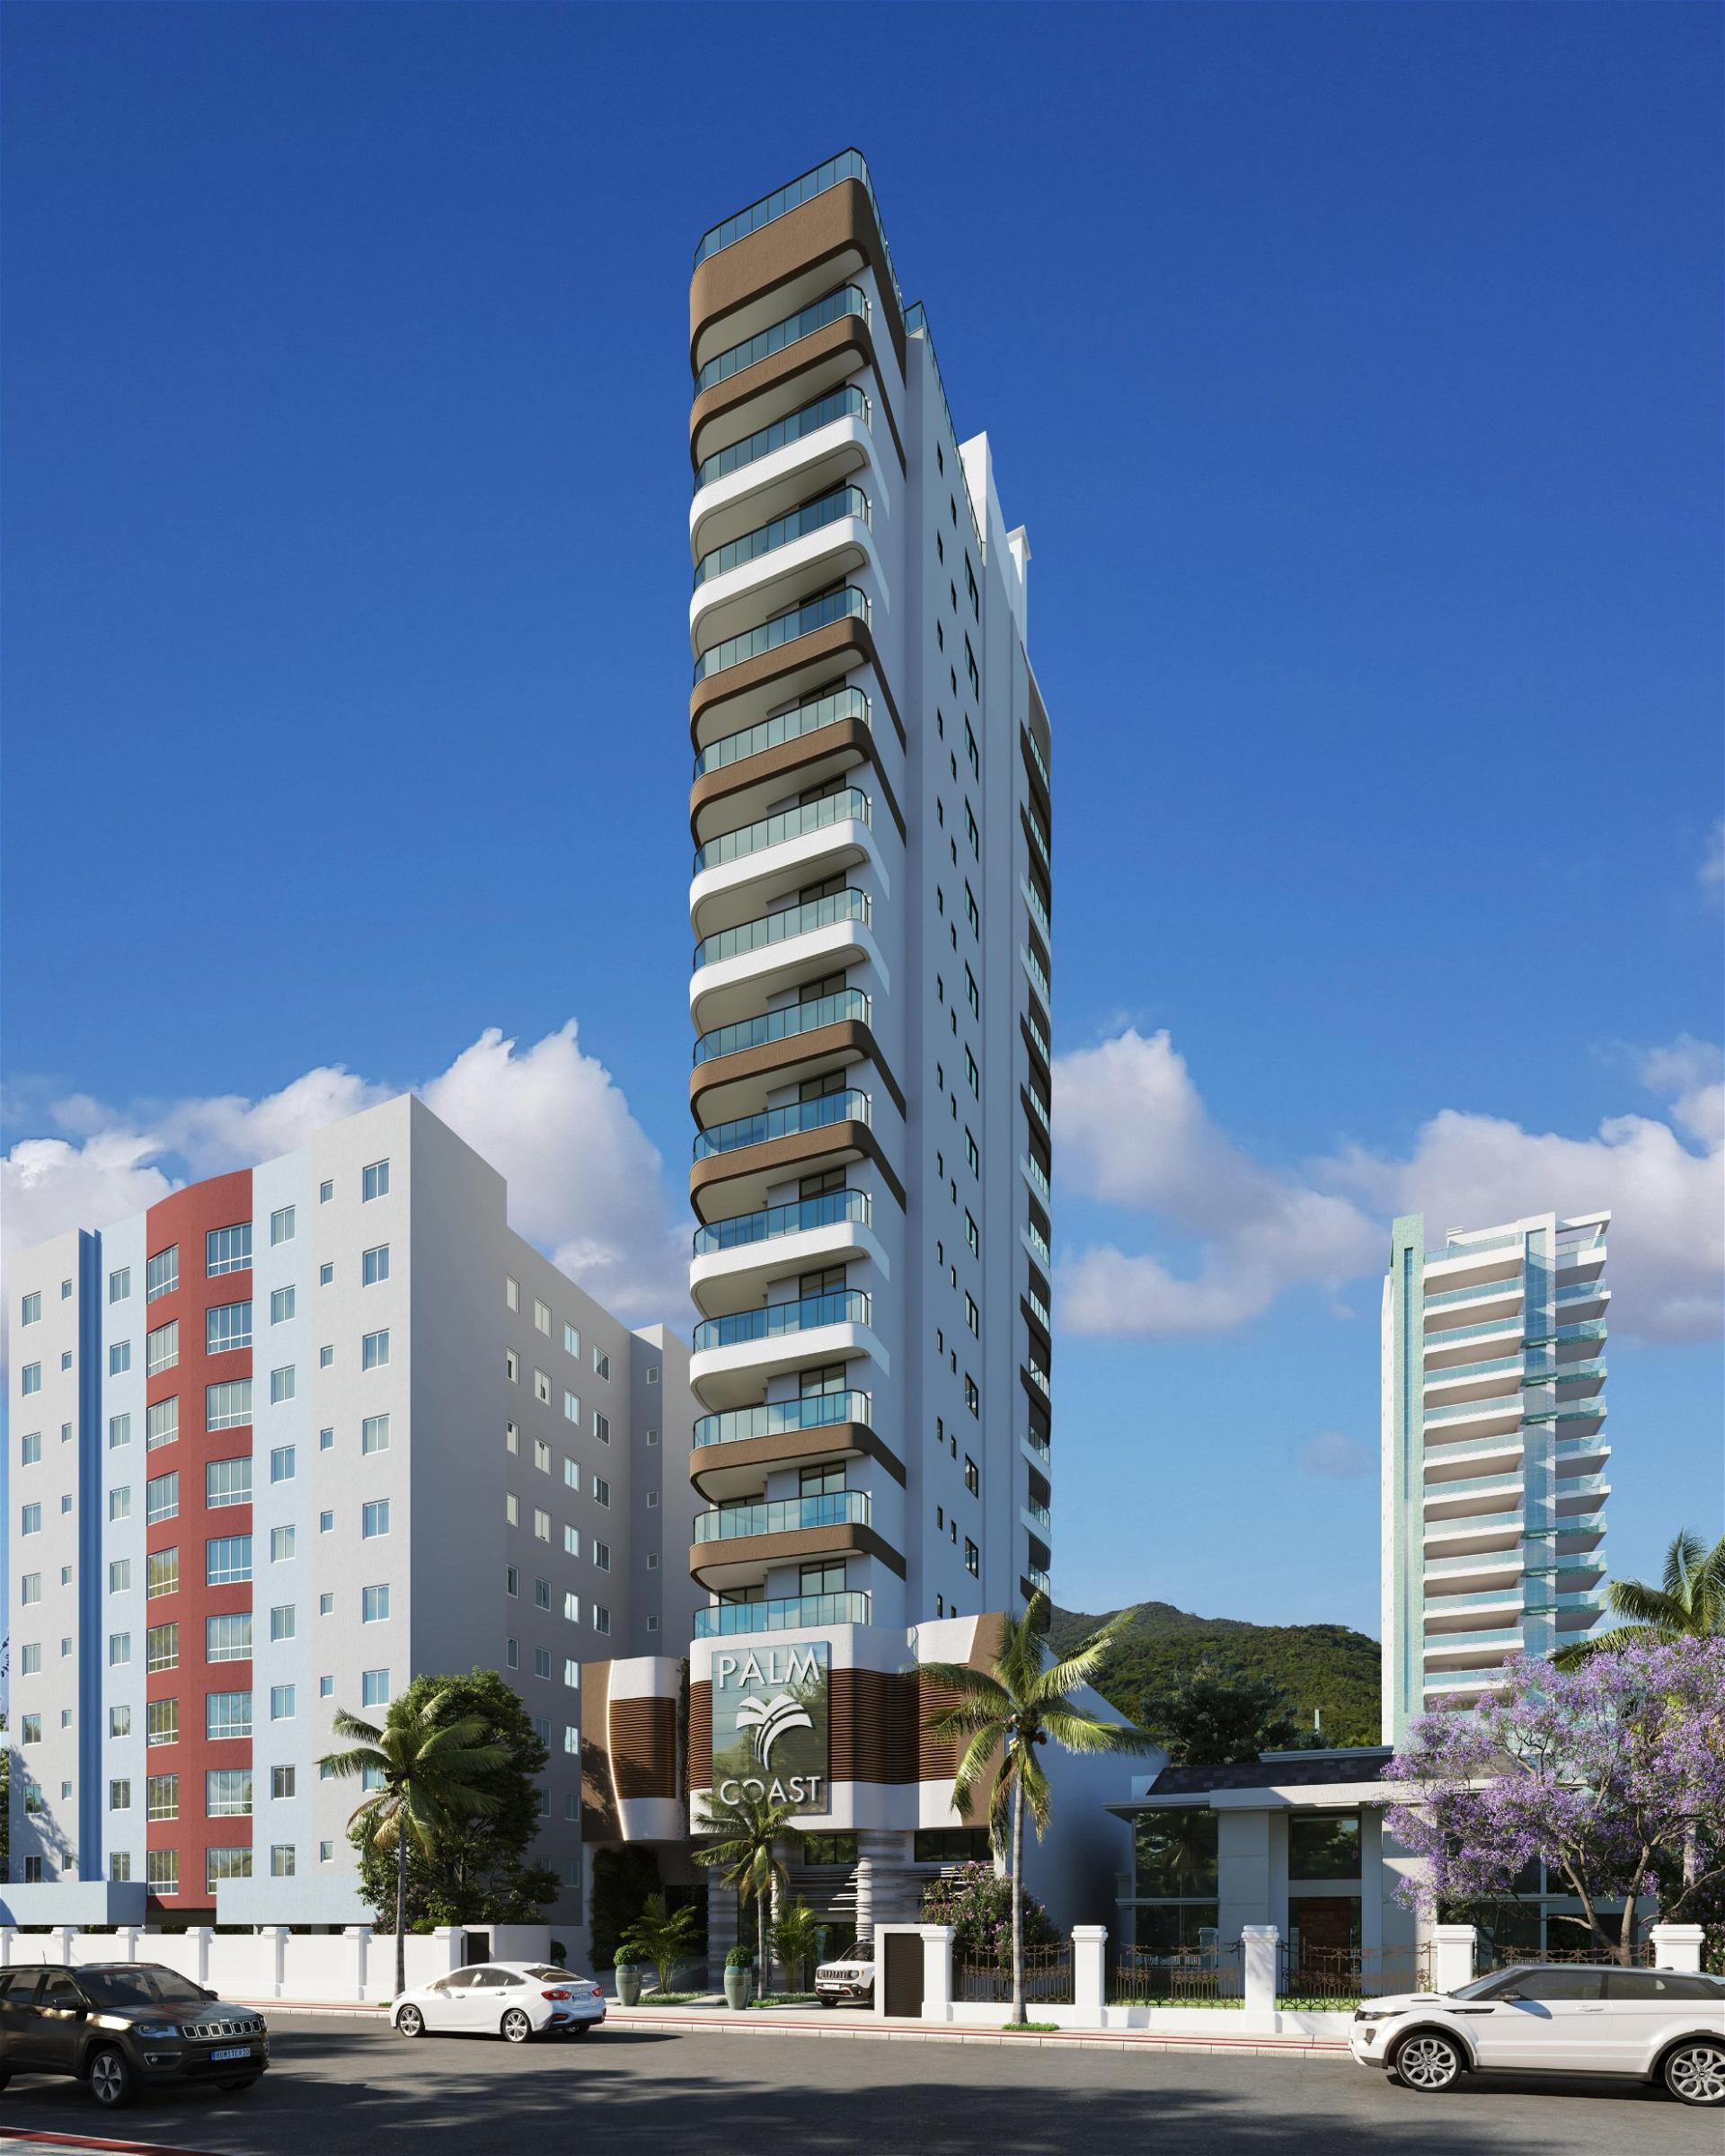 Apartamento Lançamento em Praia Brava - Itajaí - Santa Catarina - PALM COAST